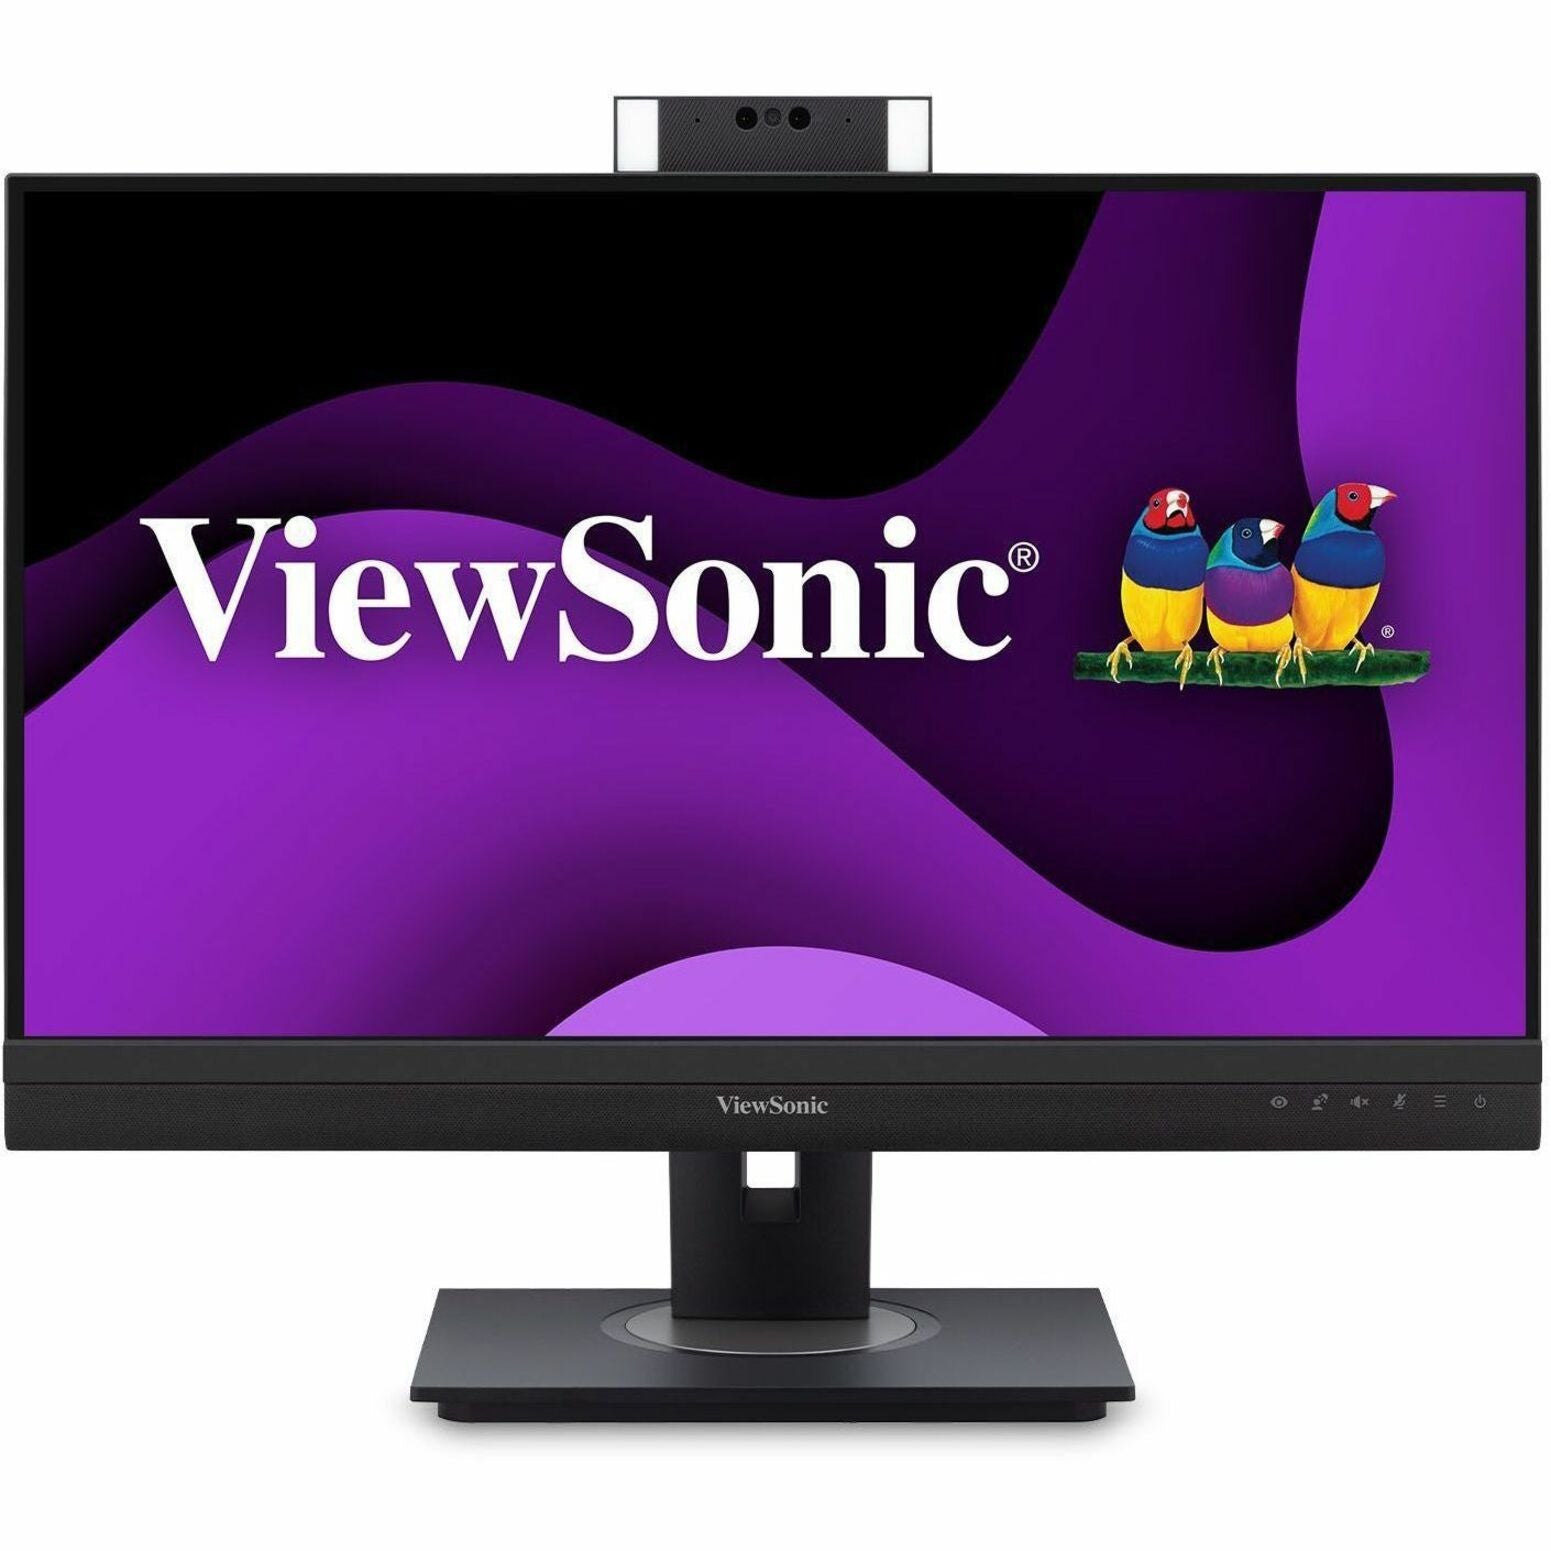 ViewSonic   27IN  1440P   VIDEO CONFERENCING  MONITOR  WITH  WINDOWS HELLO  COMPATIBLE  IR  WEBCAM 9 (VG2757V-2K)   ビューソニック  27インチ  1440P  ビデオ会議 モニター  ウィンドウズ ハロー  対応  IR ウェブカメラ、9（VG2757V-2K)